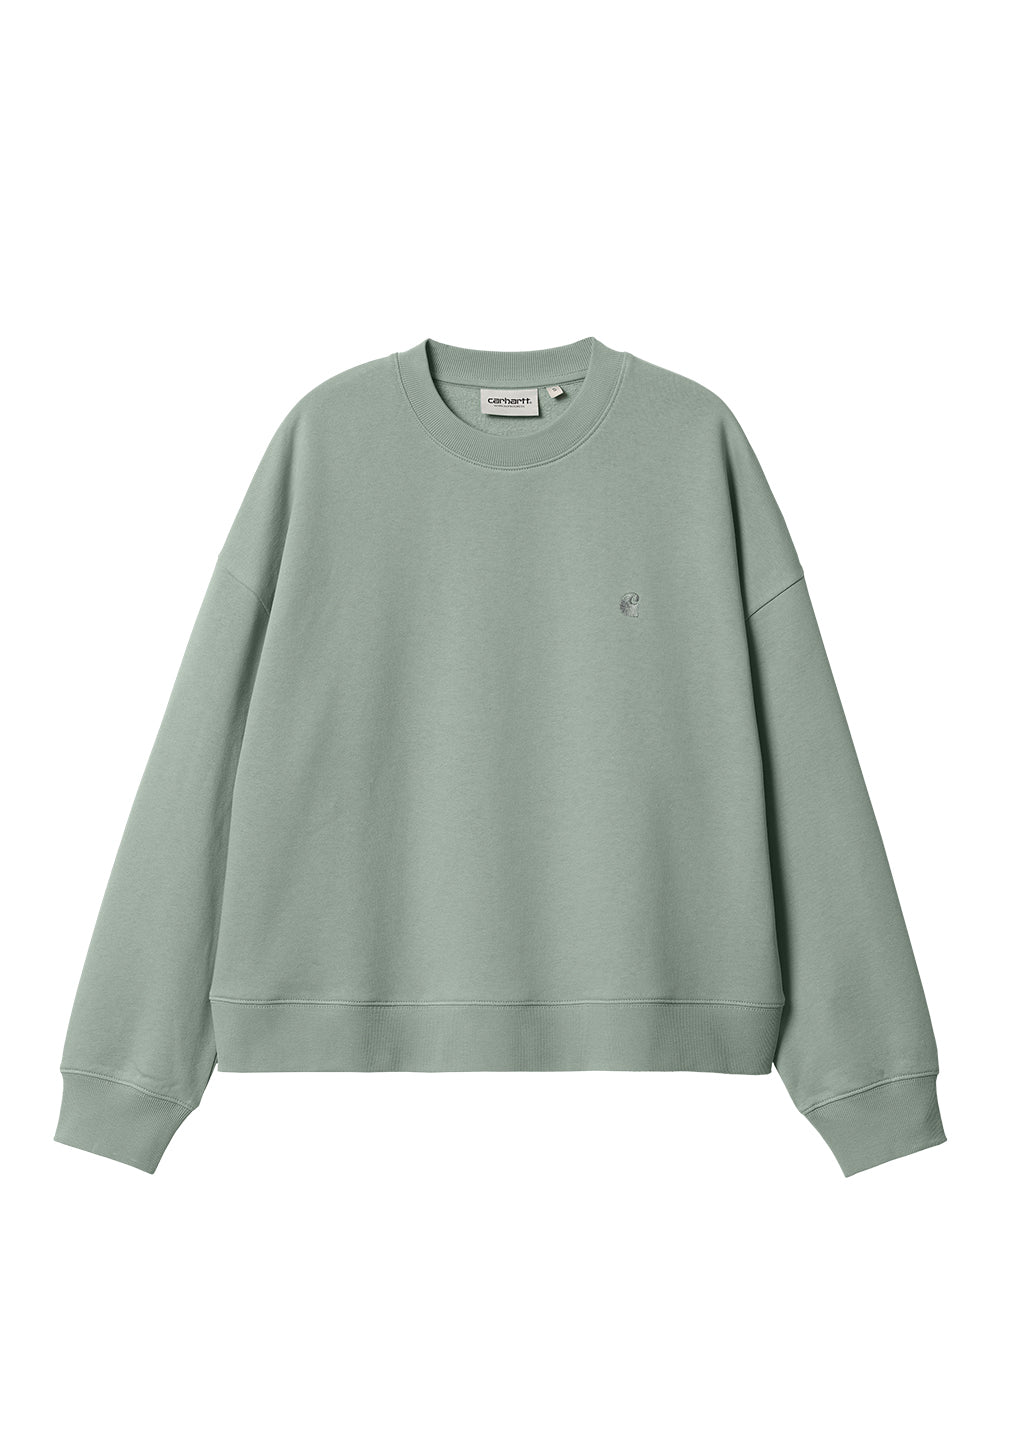 Brands We Love / Women's Sweaters & Sweatshirts